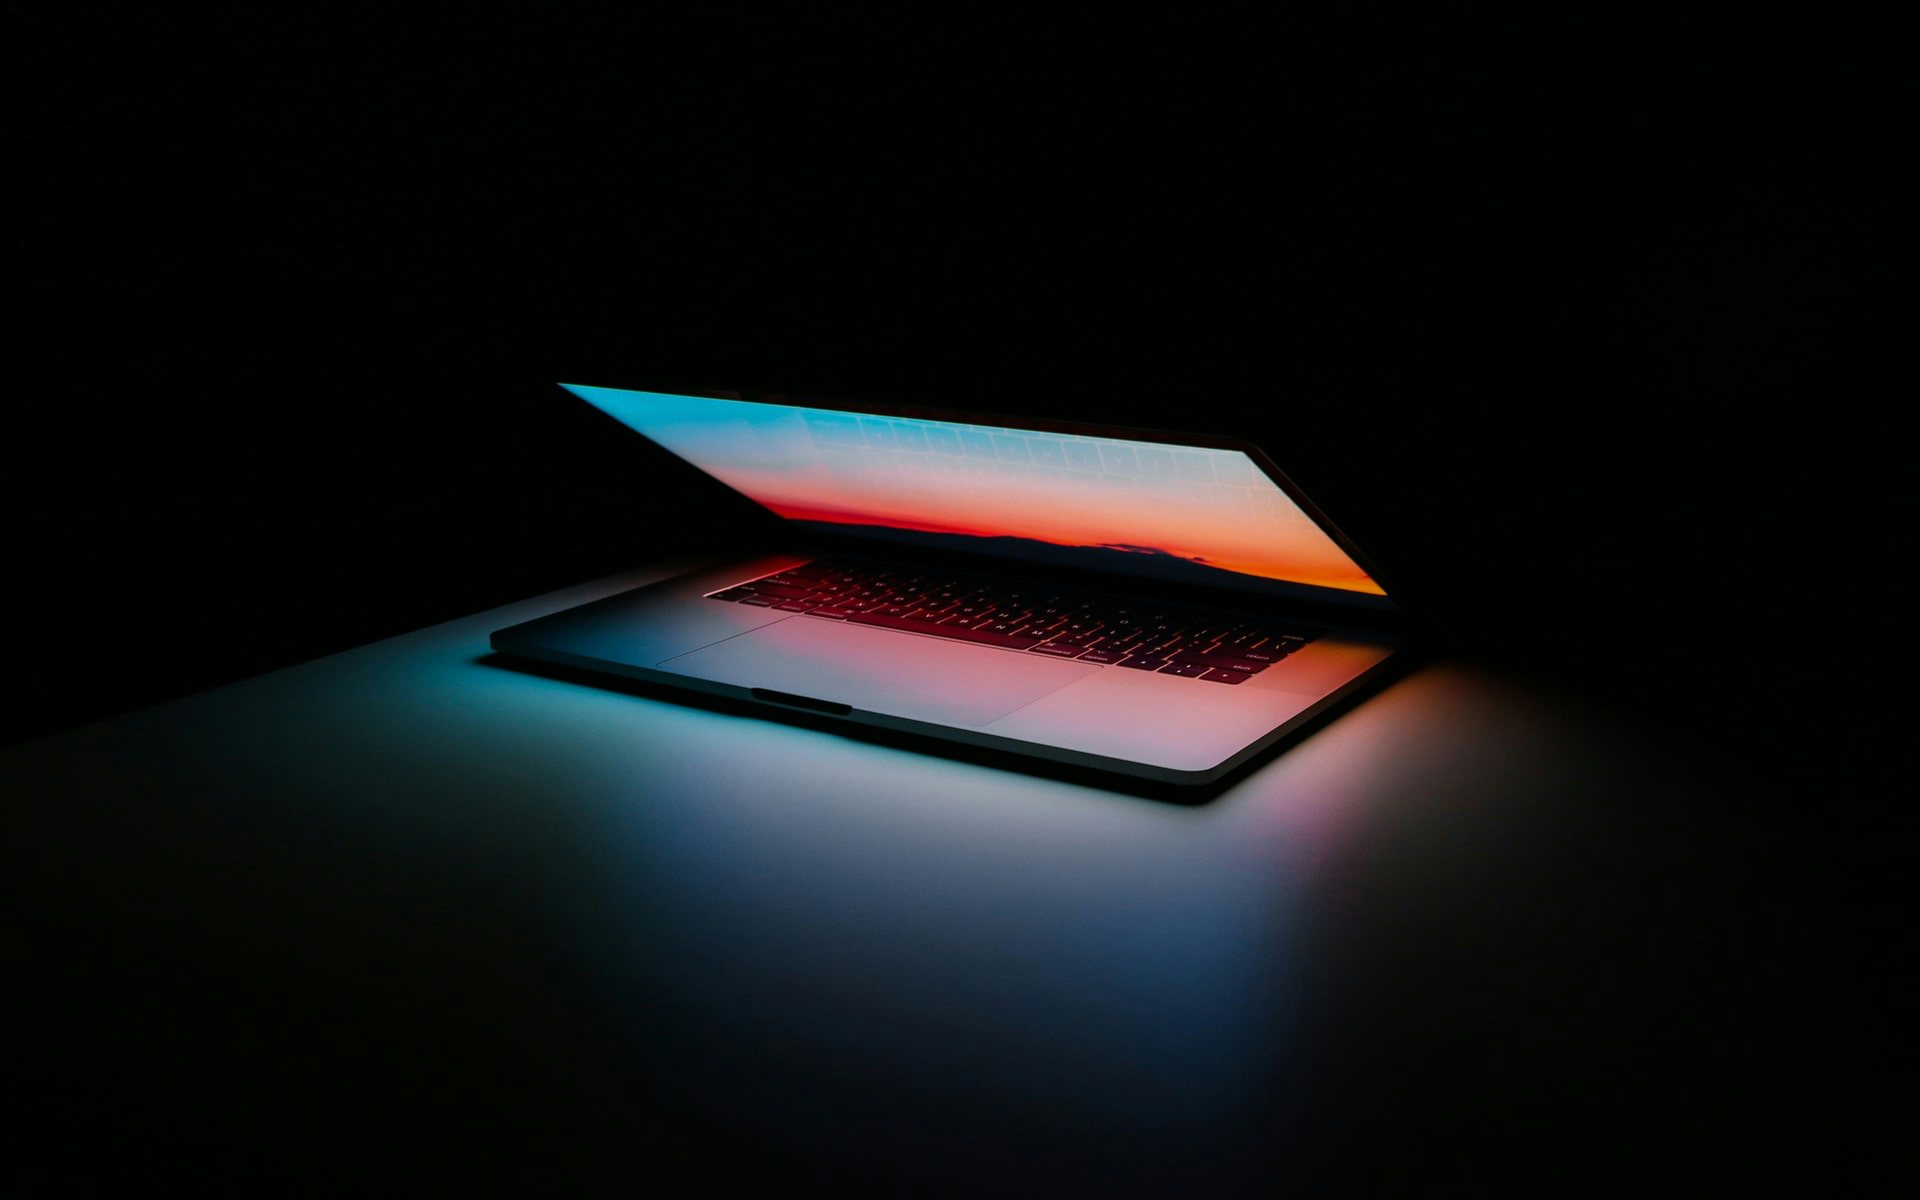 Macbook screen lighting up a dark space